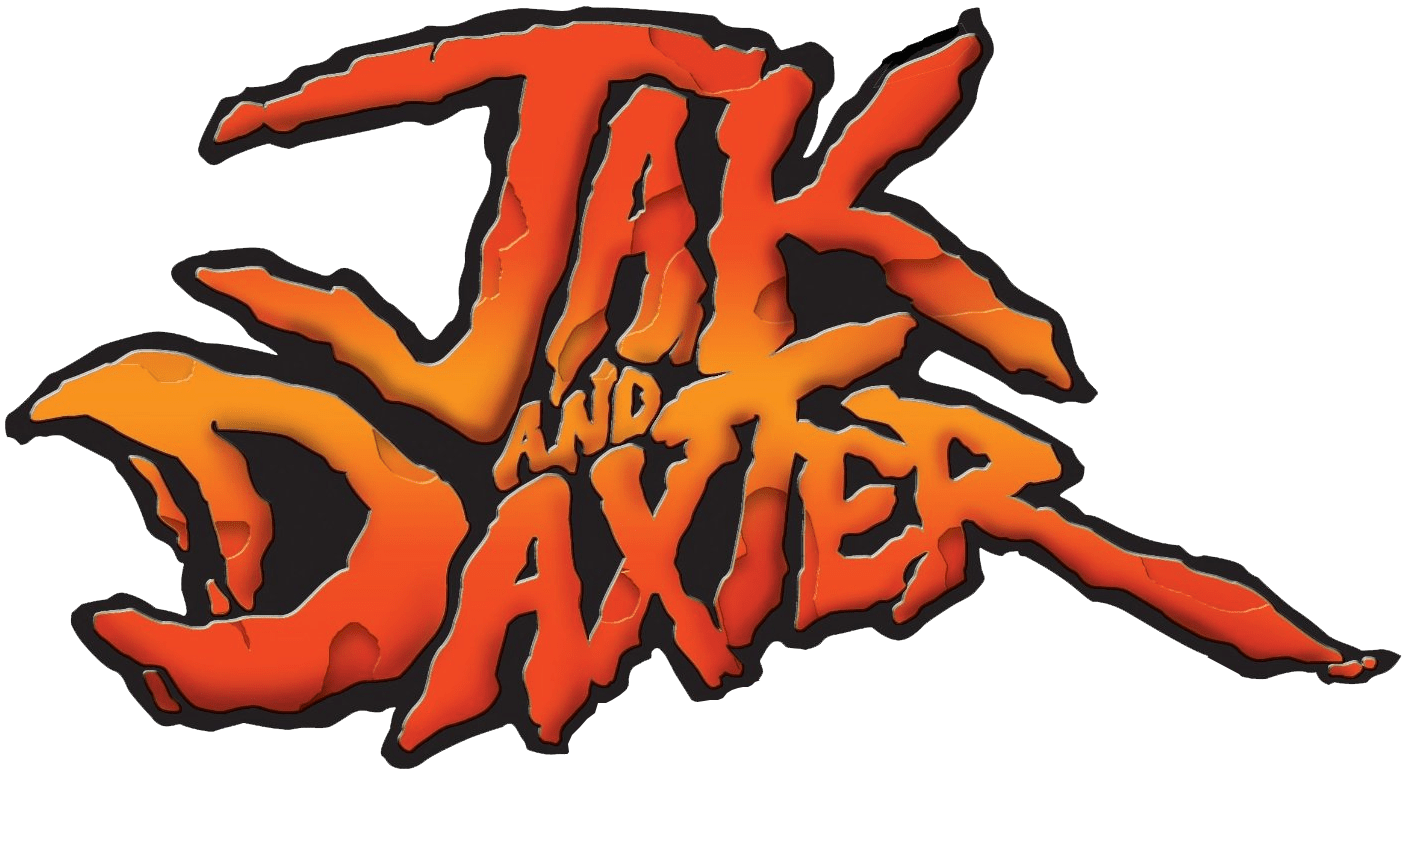 Logo Jak & Daxter